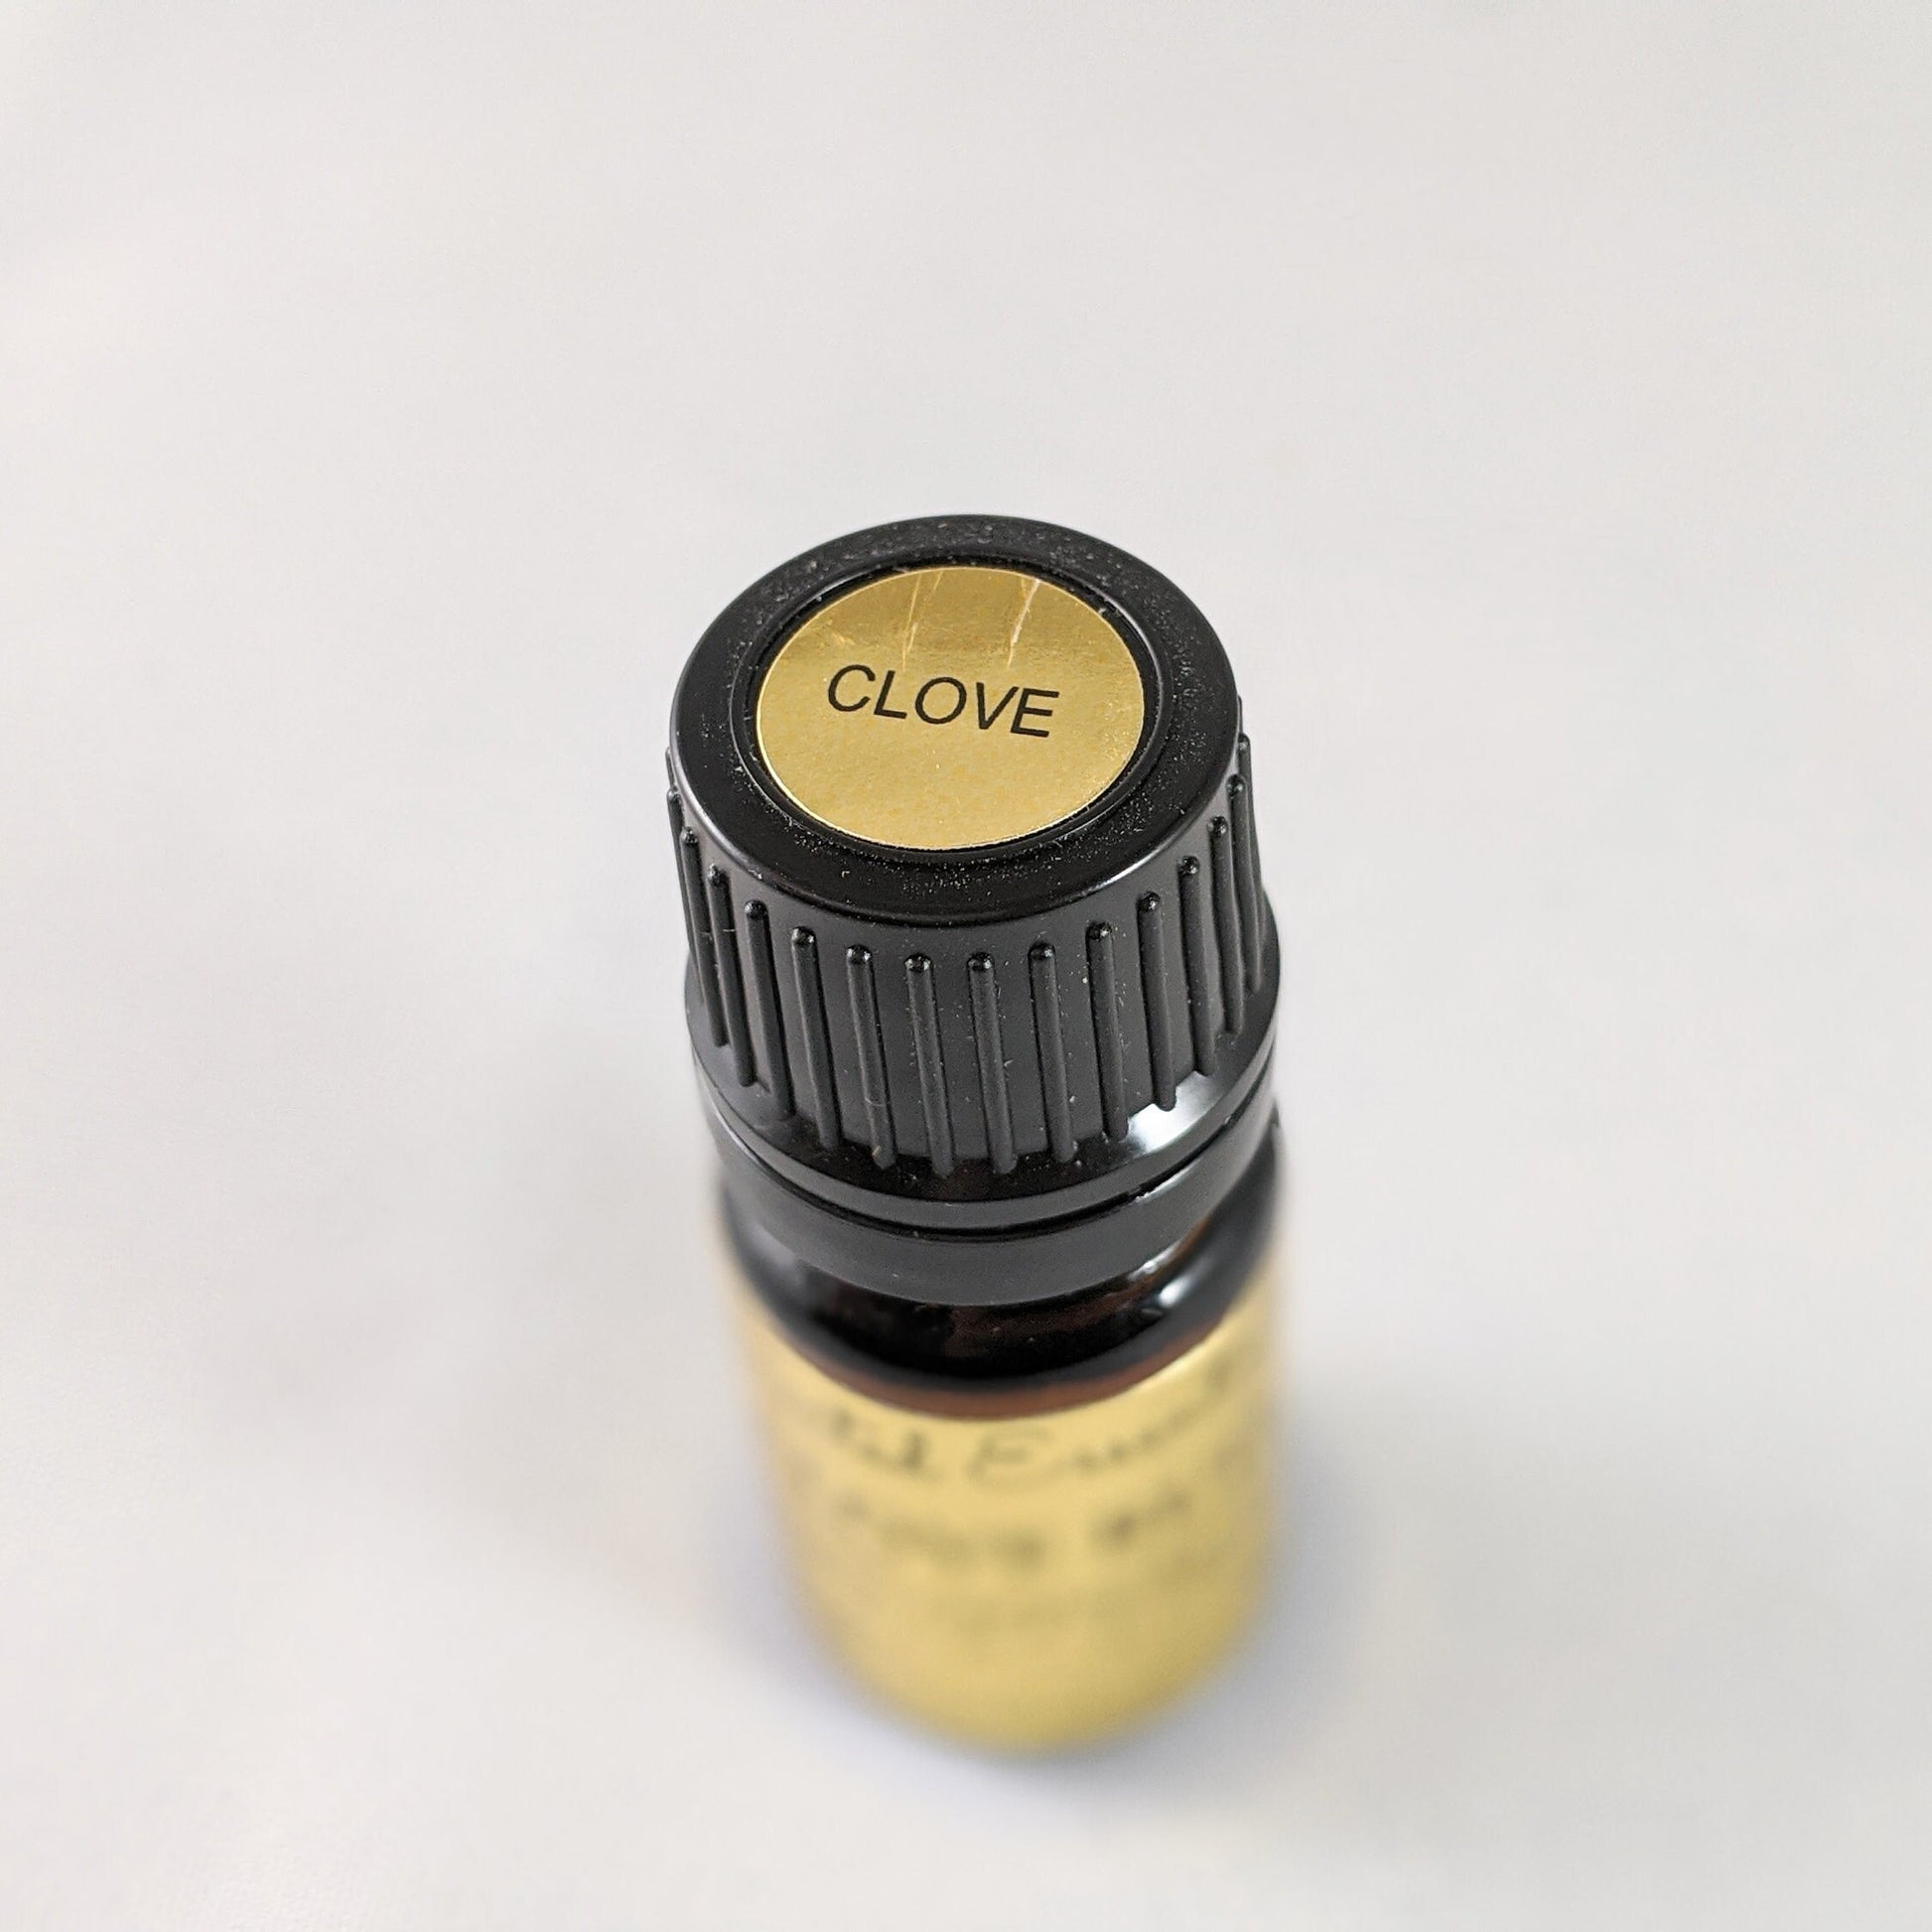 Clove Essential Oil | Organic Essential Oil of Clove | 100% Pure Essential Oil | Clove Aromatherapy Oil